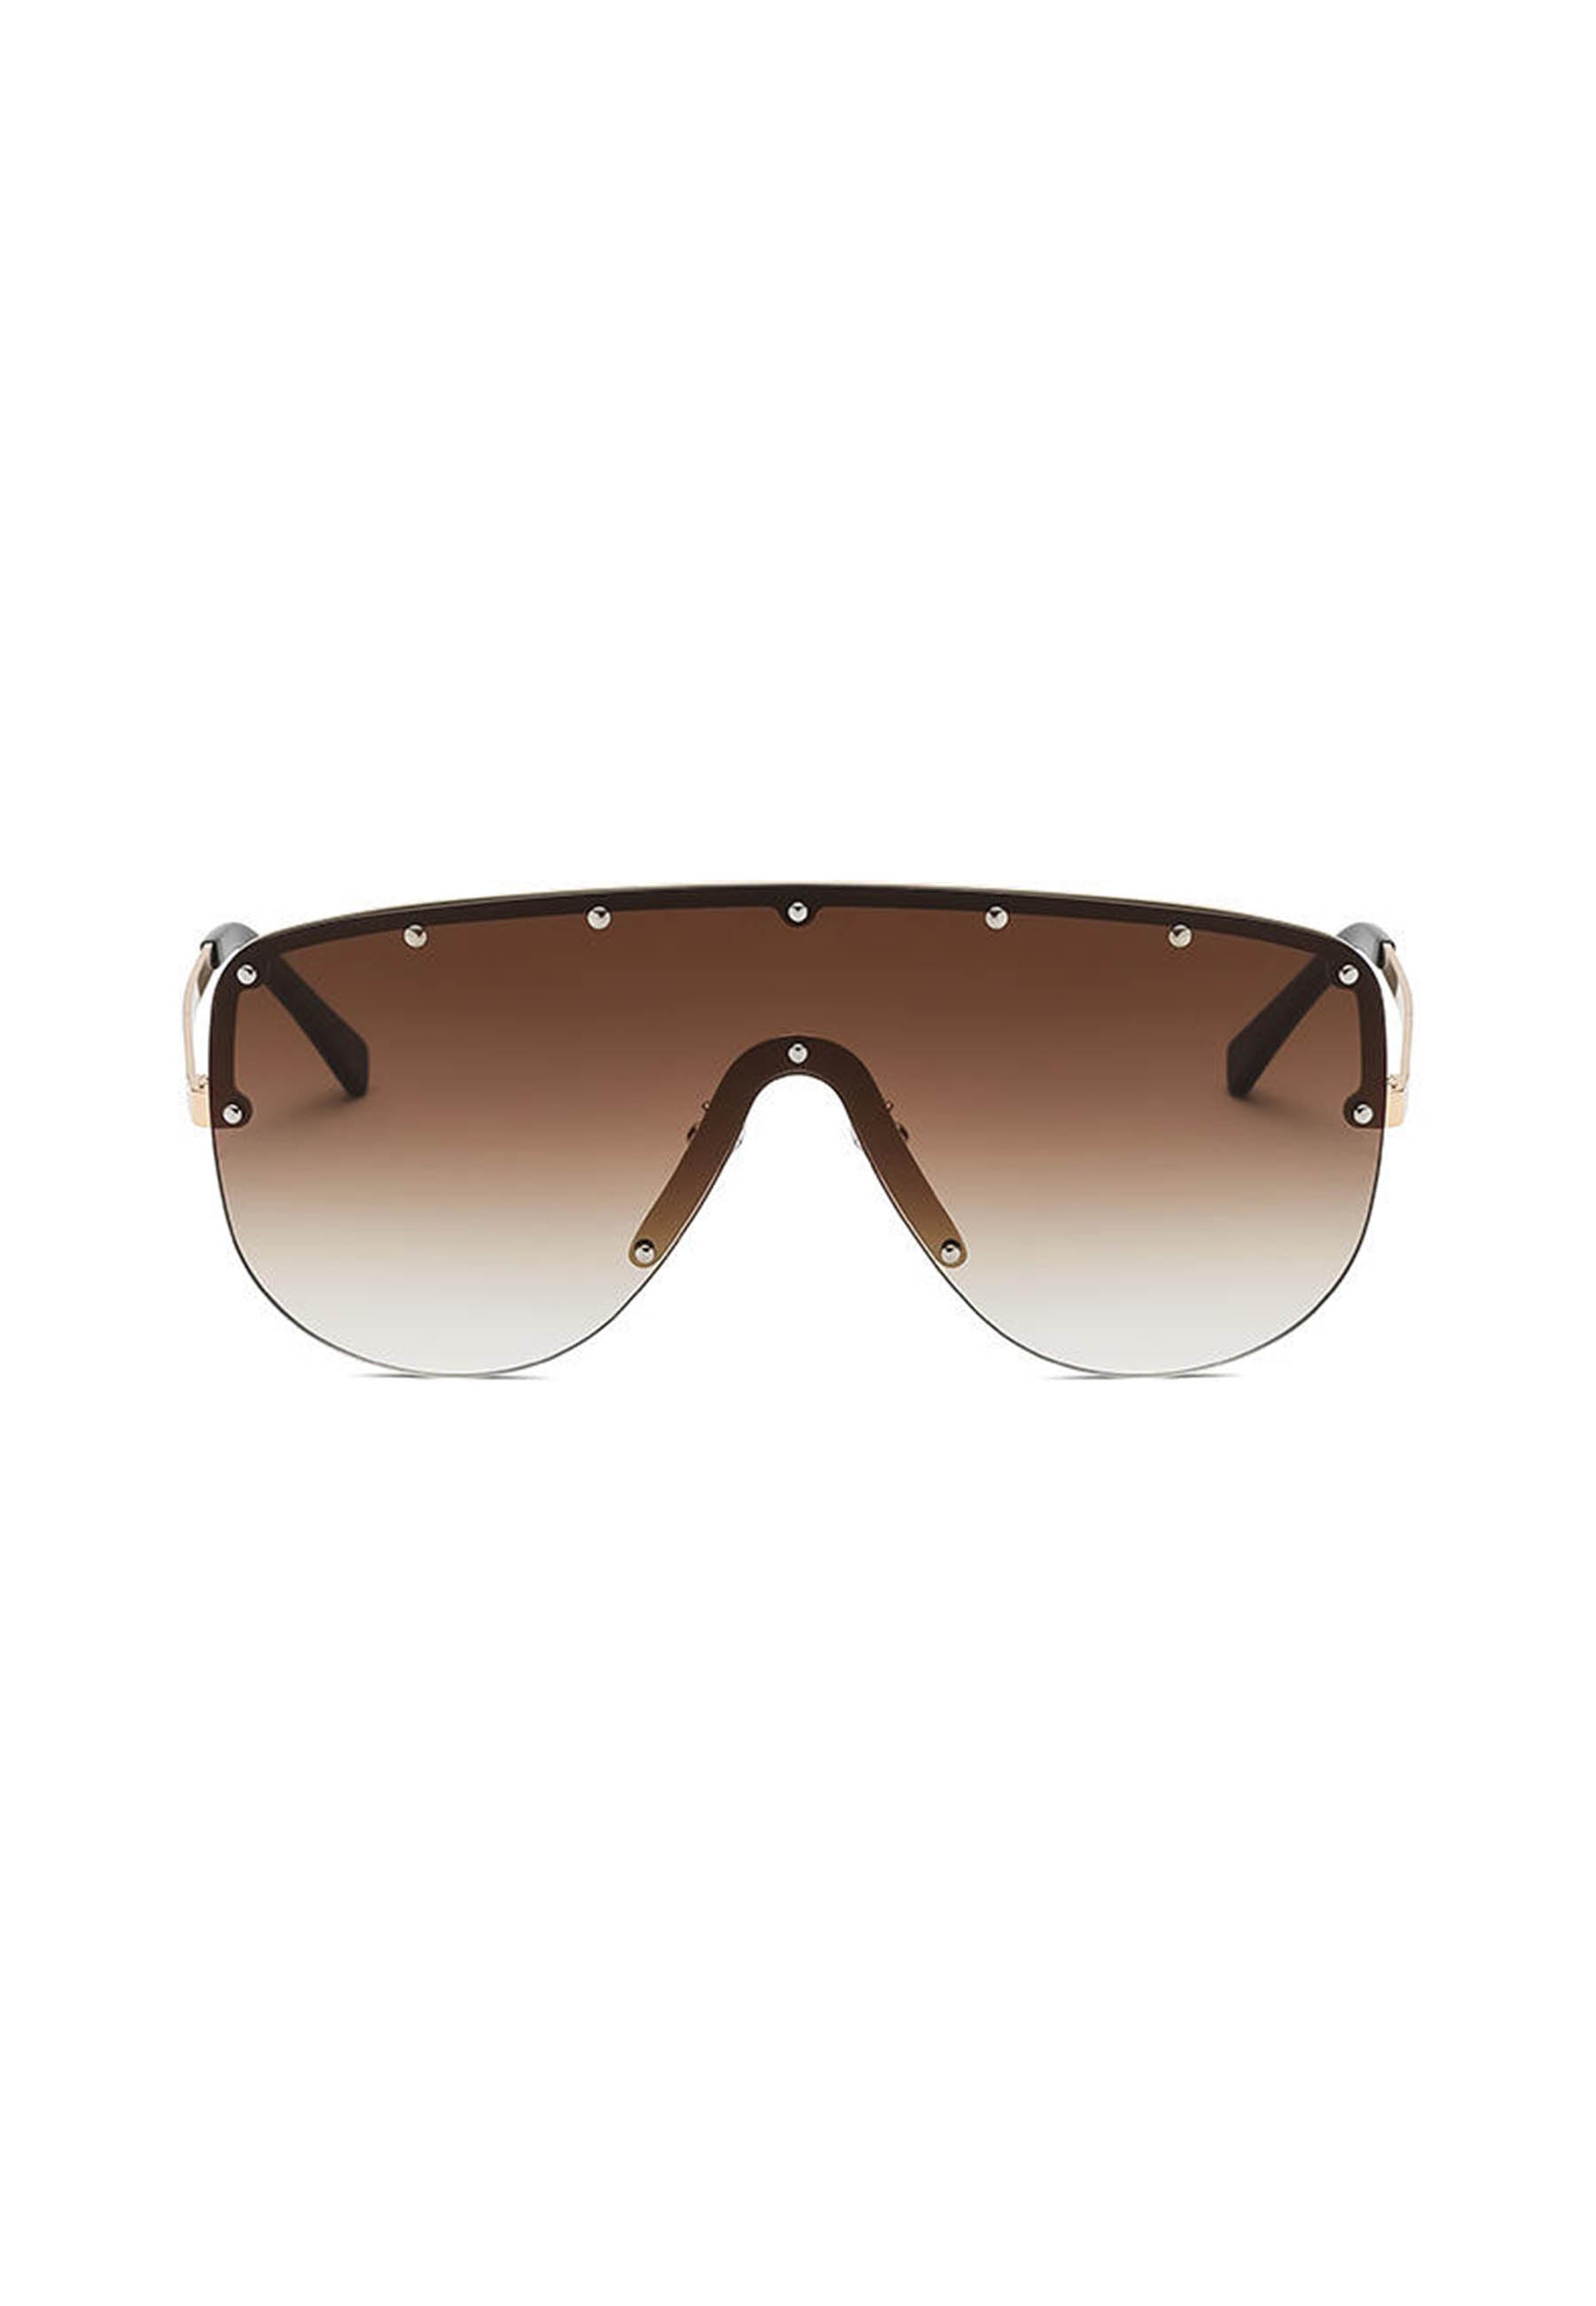 Oversized Steampunk Sunglasses